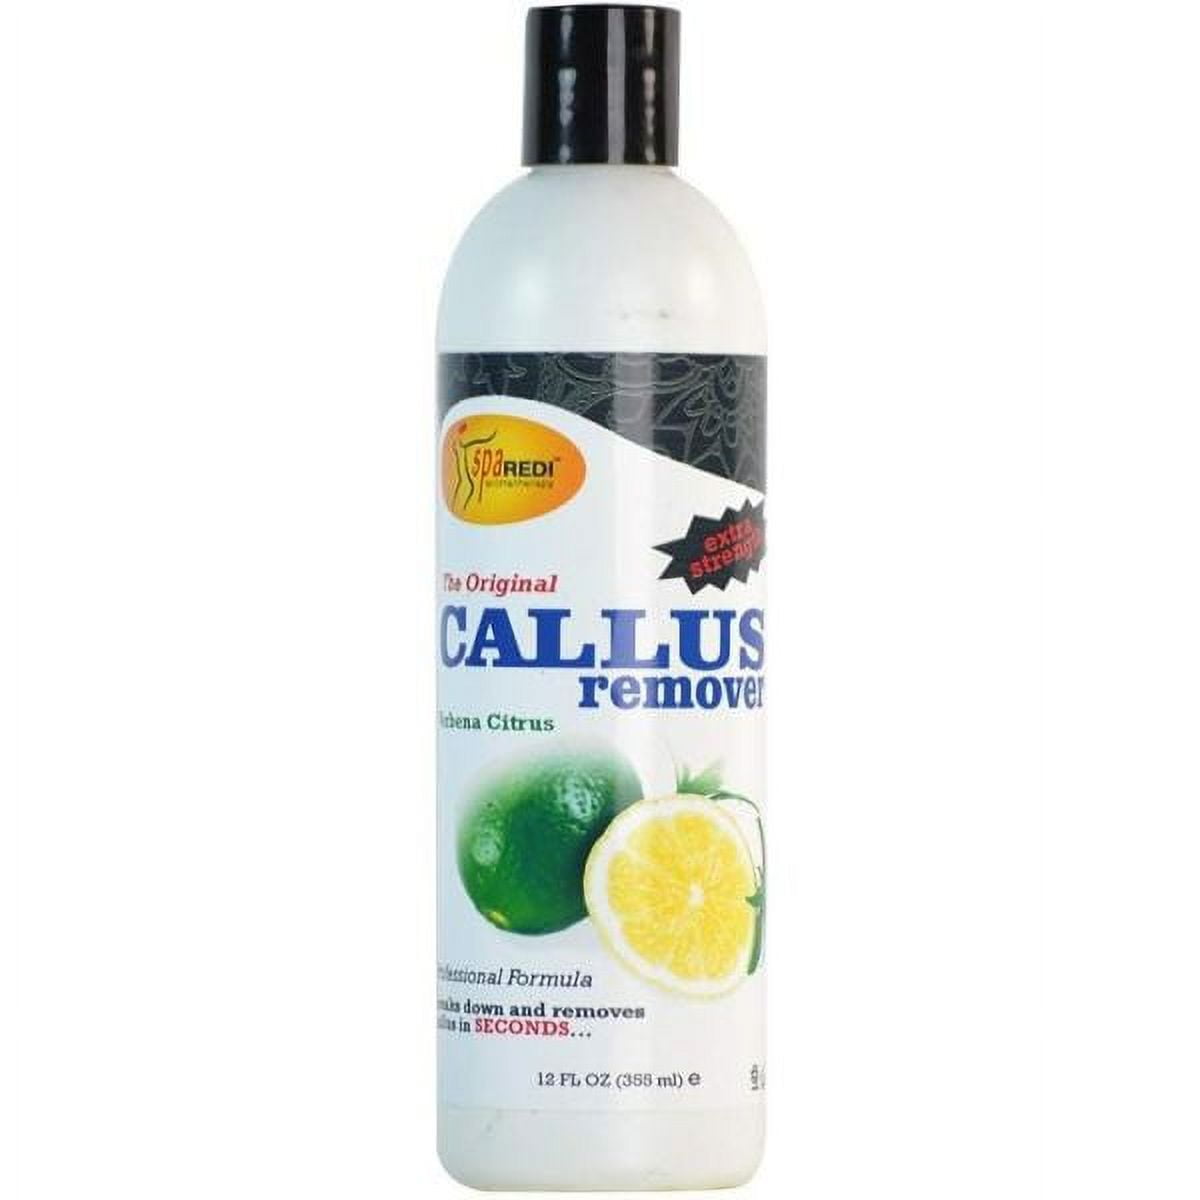 Tachibelle Callus Remover Lemon For Feet Callus and Corn